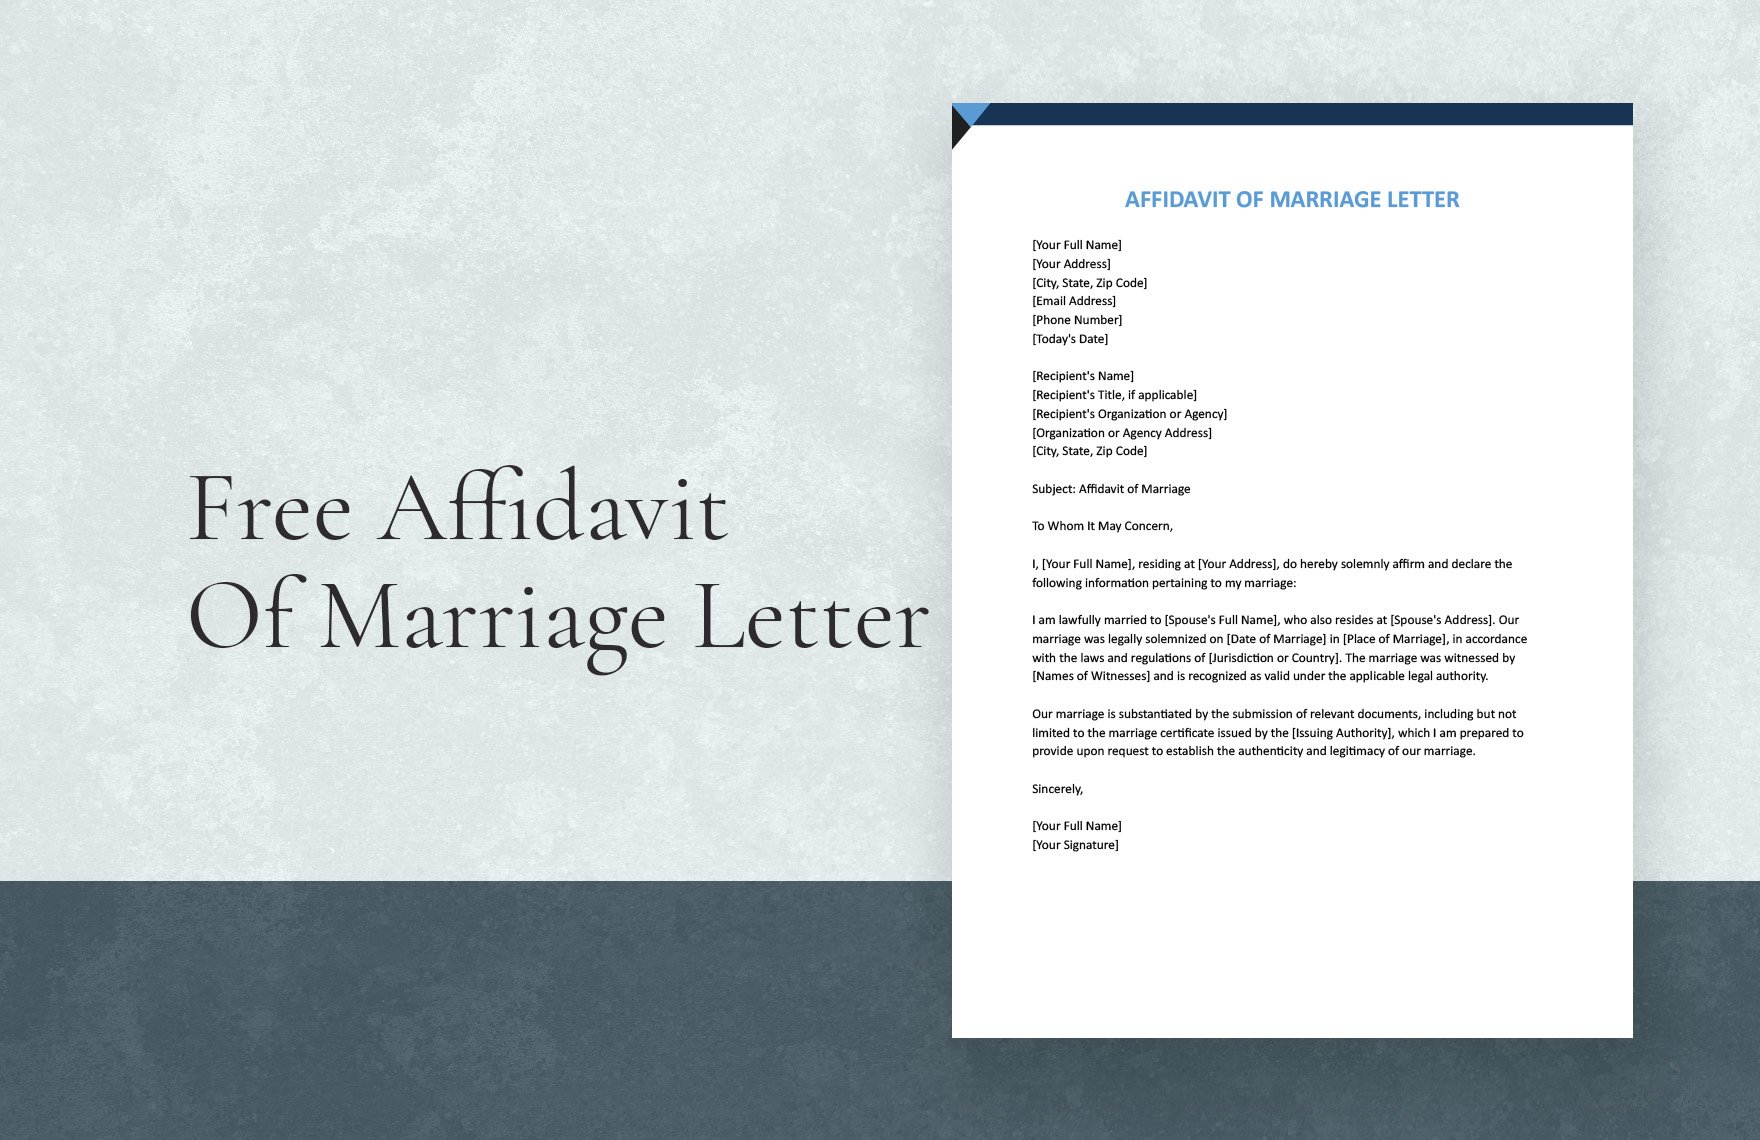 Affidavit Of Marriage Letter in Word, Google Docs